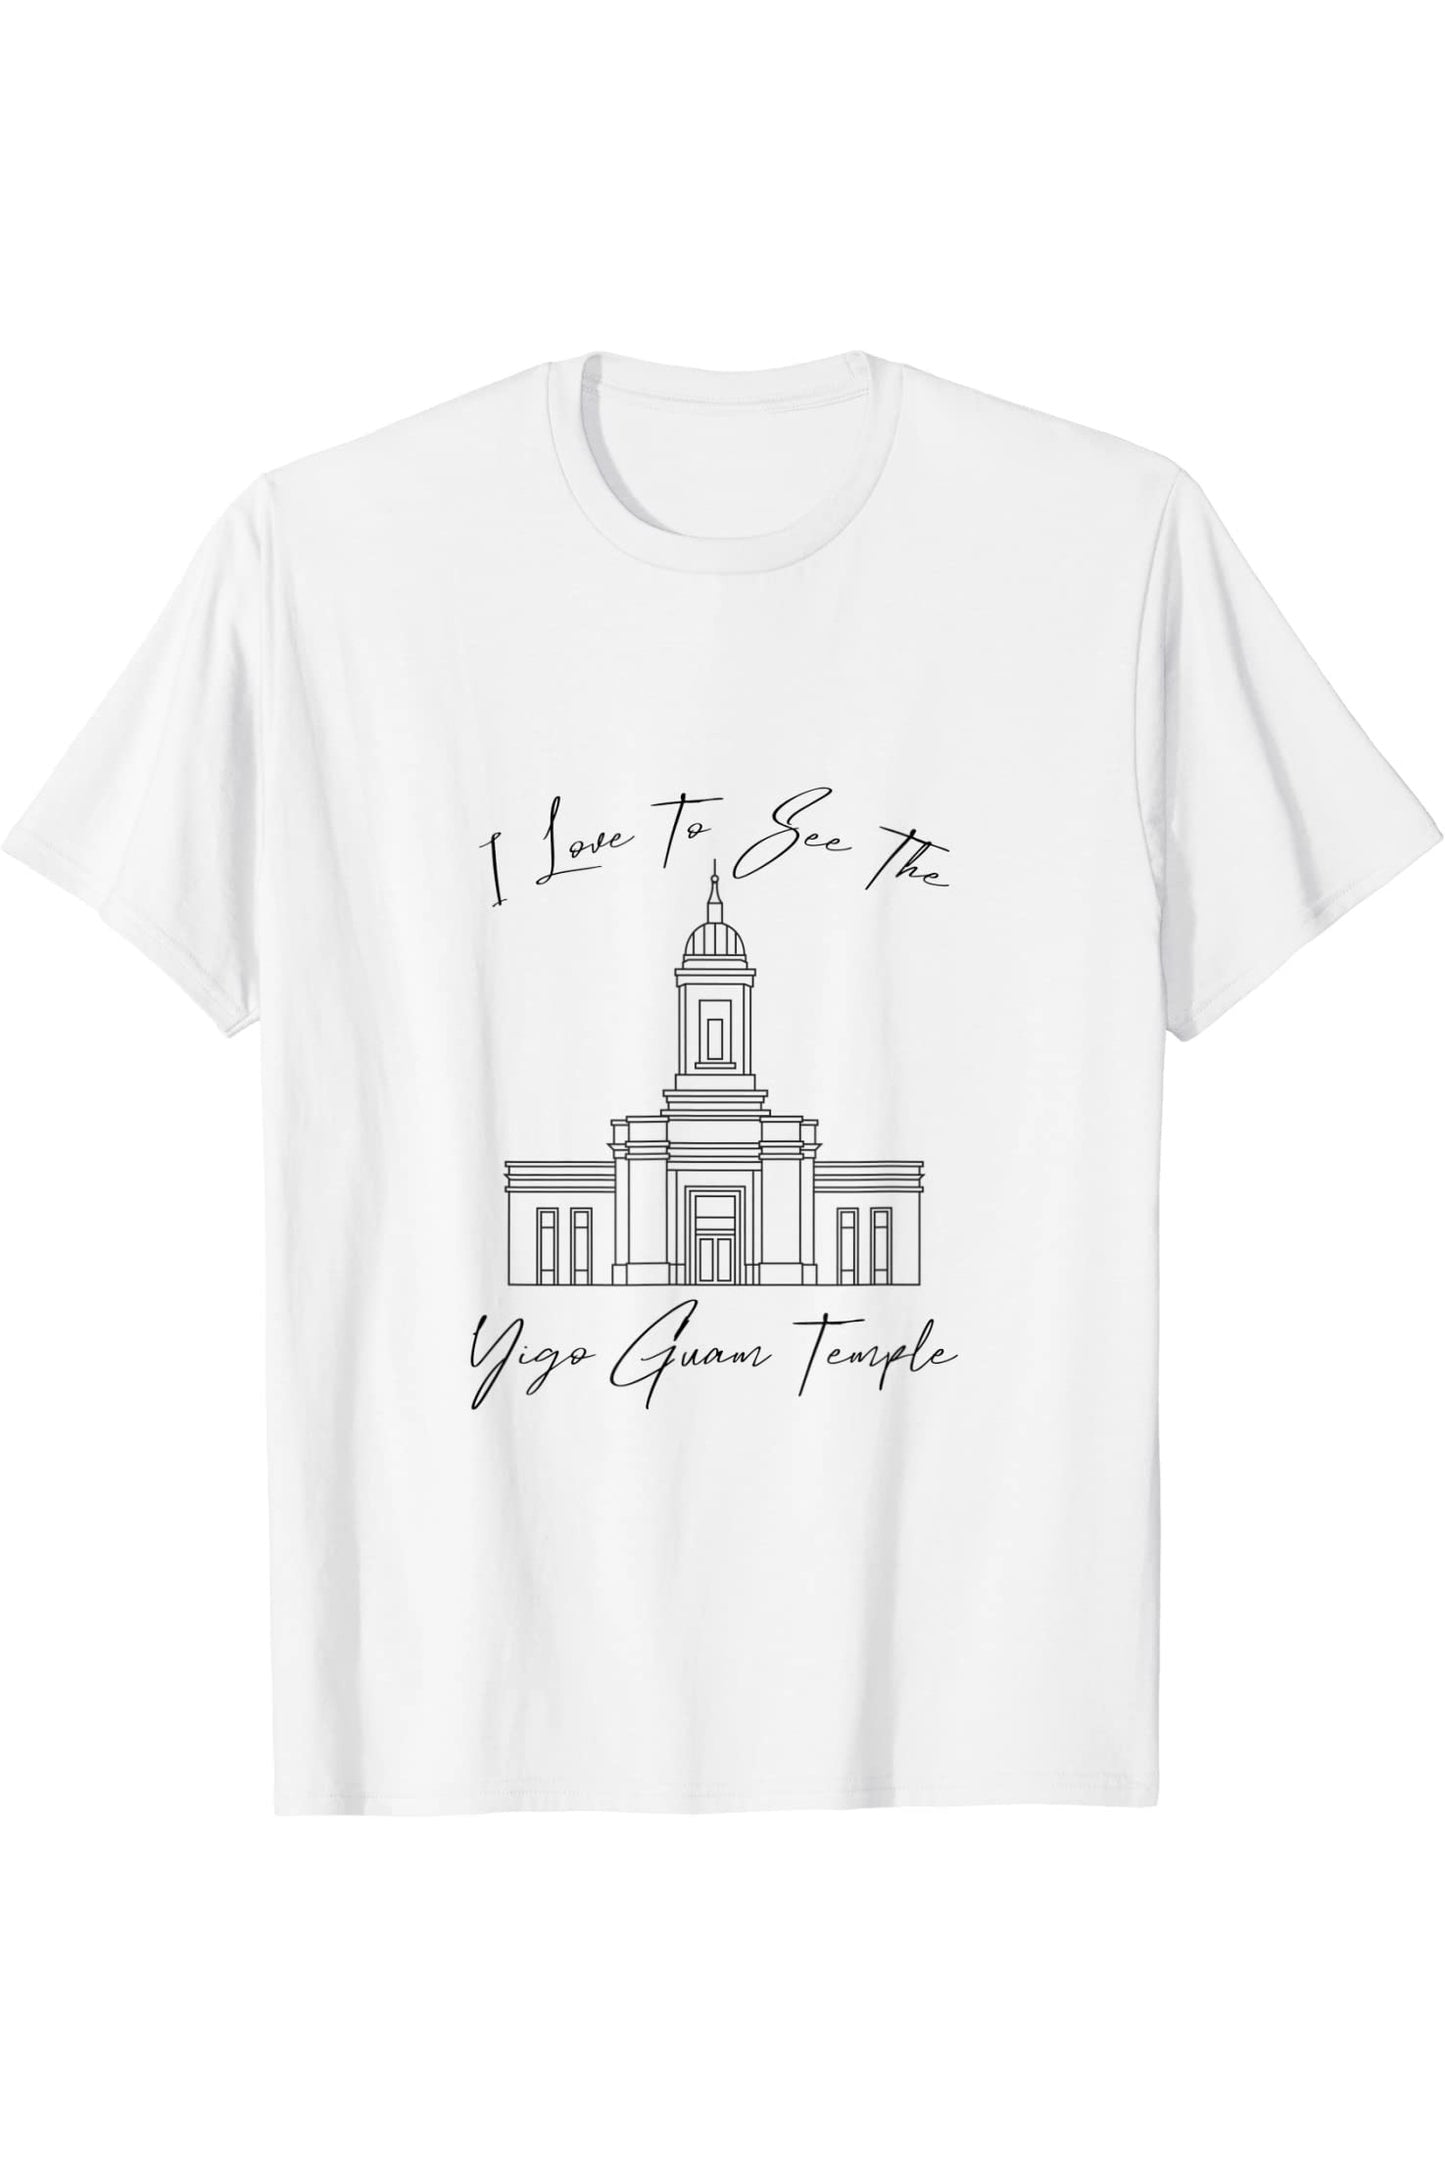 Yigo Guam Temple T-Shirt - Calligraphy Style (English) US